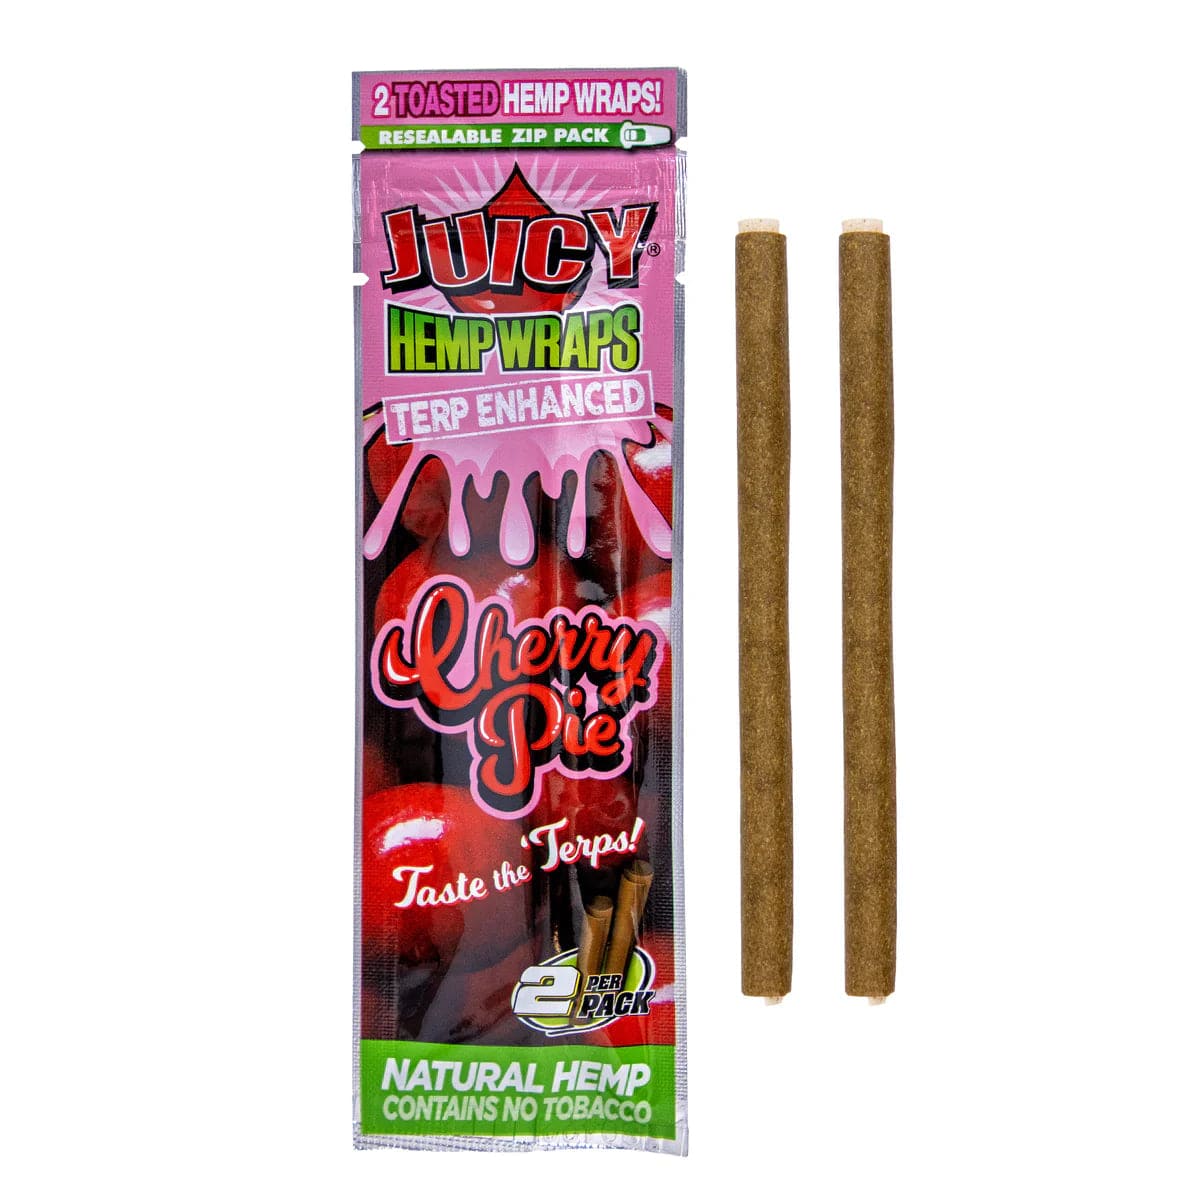 Juicy Jay Hemp Wraps - Cherry Pie